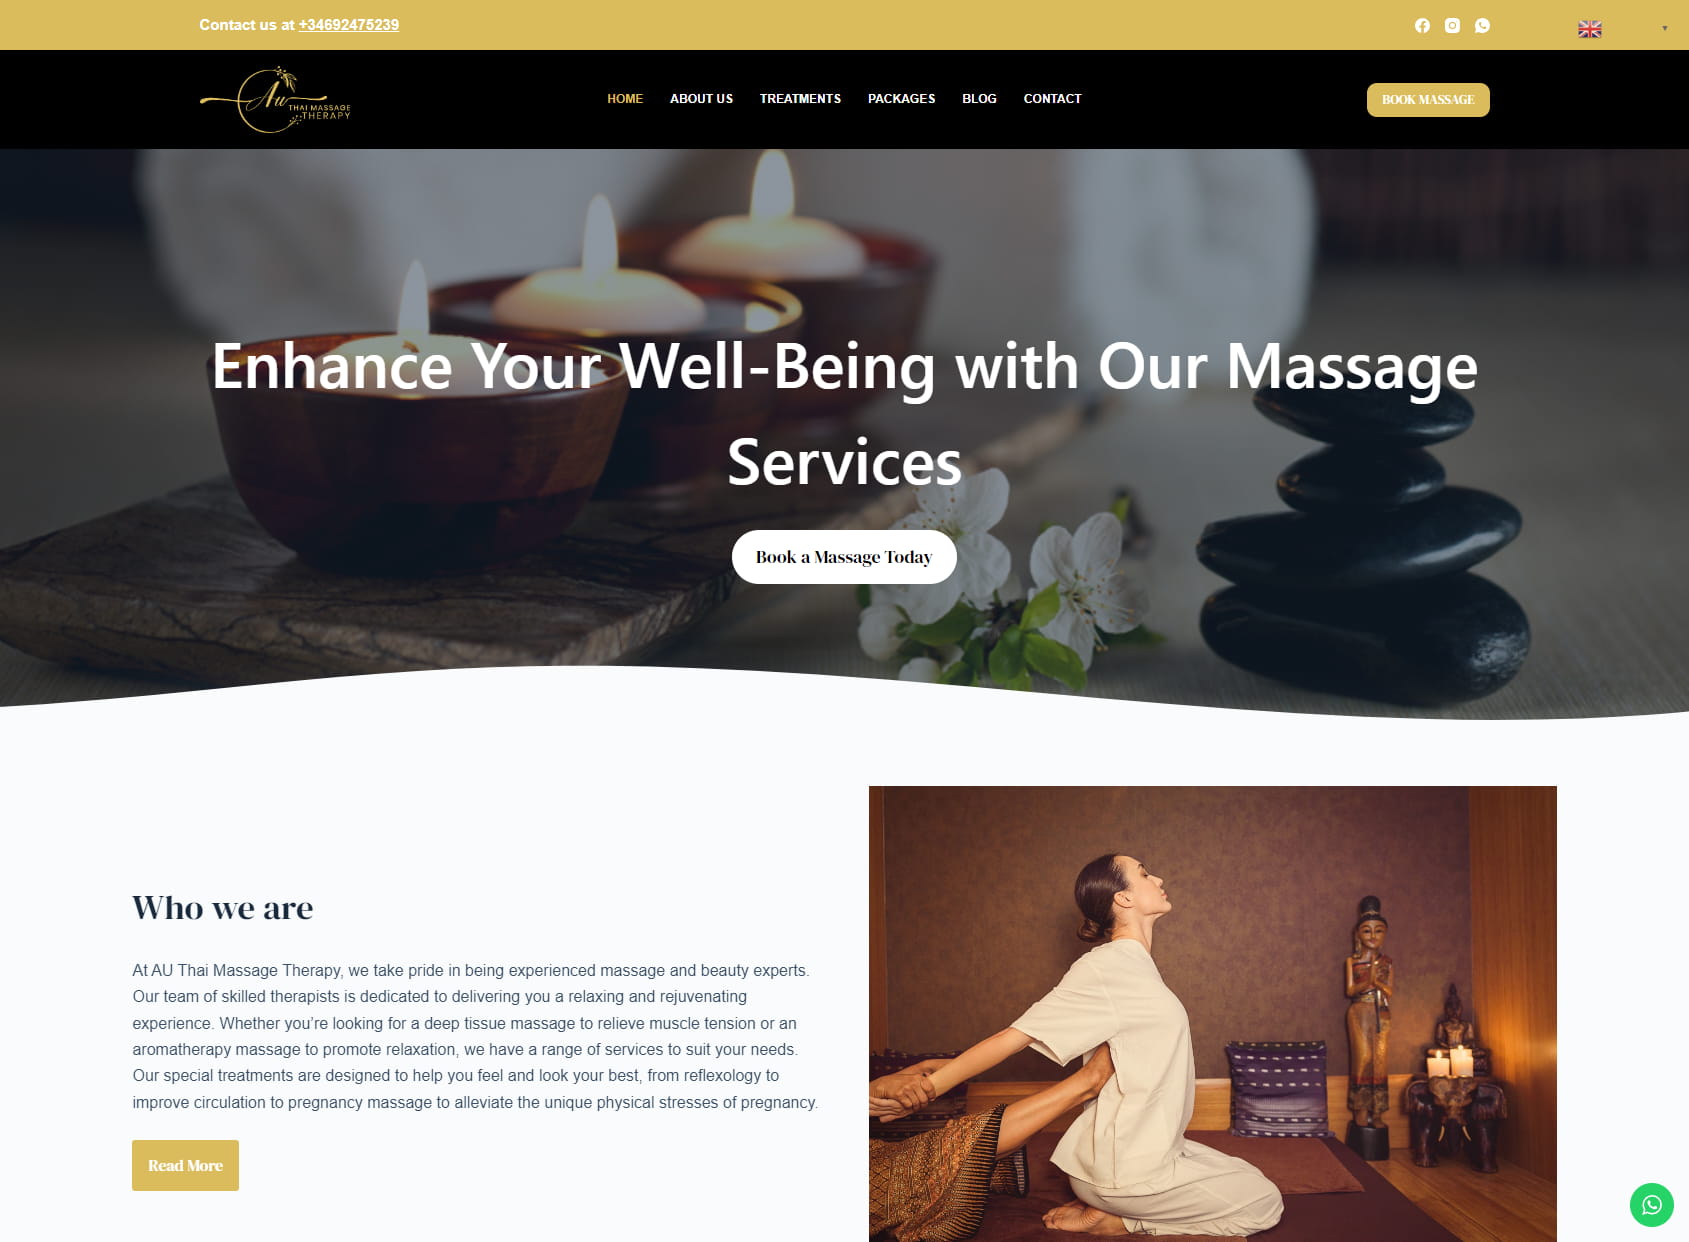 AU Thai Massage Therapy